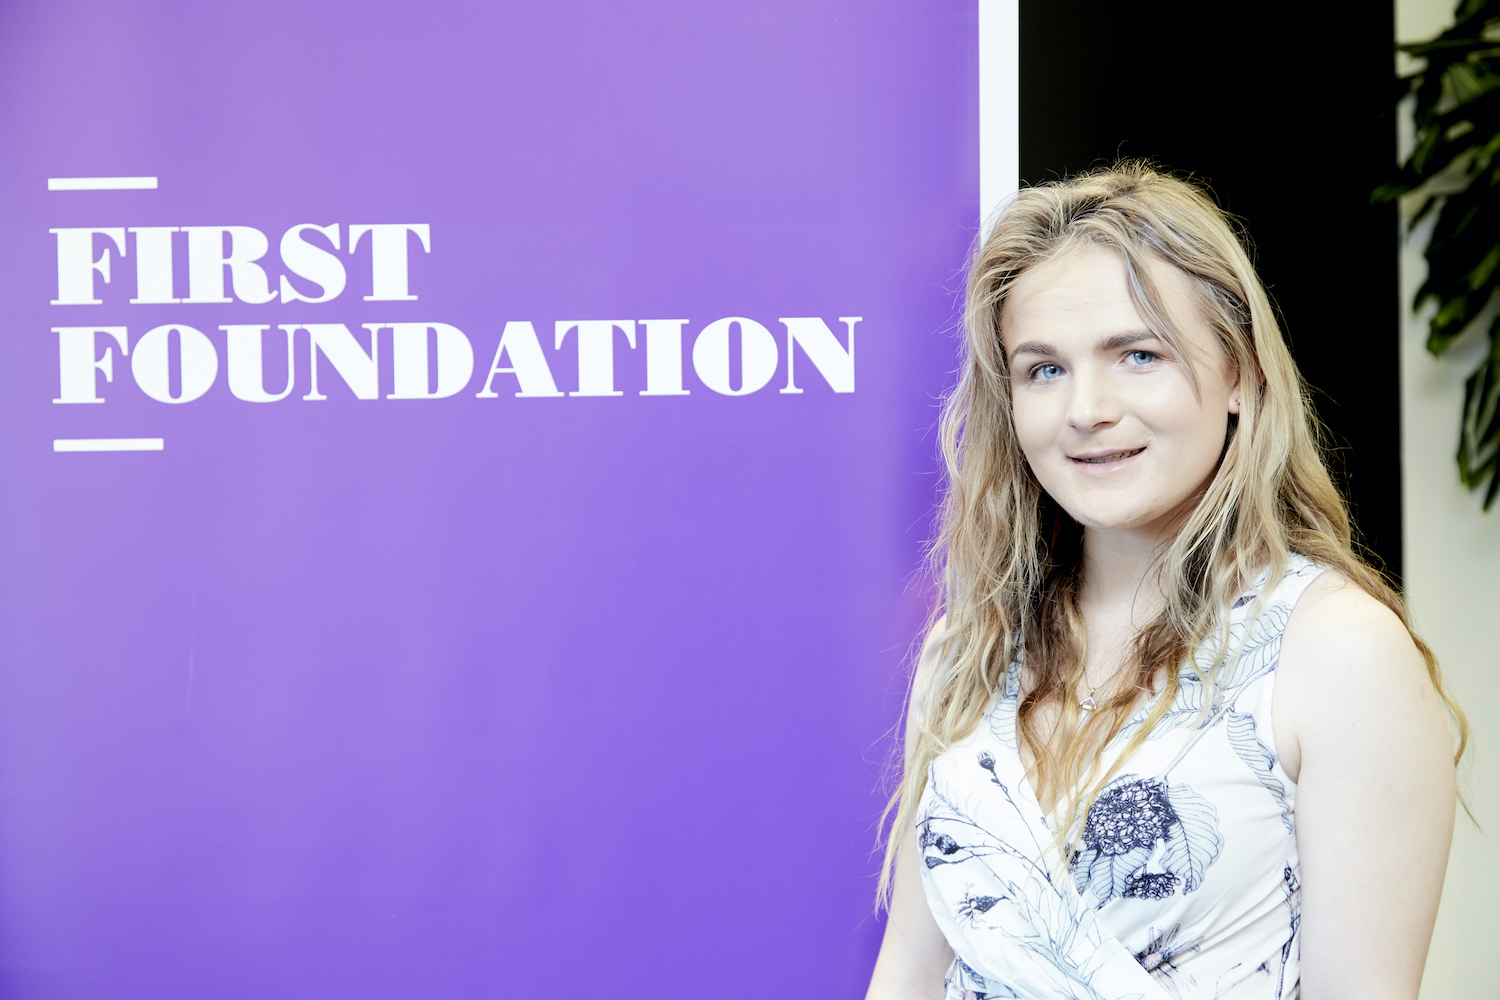 First Foundation helps Kaycie make her path